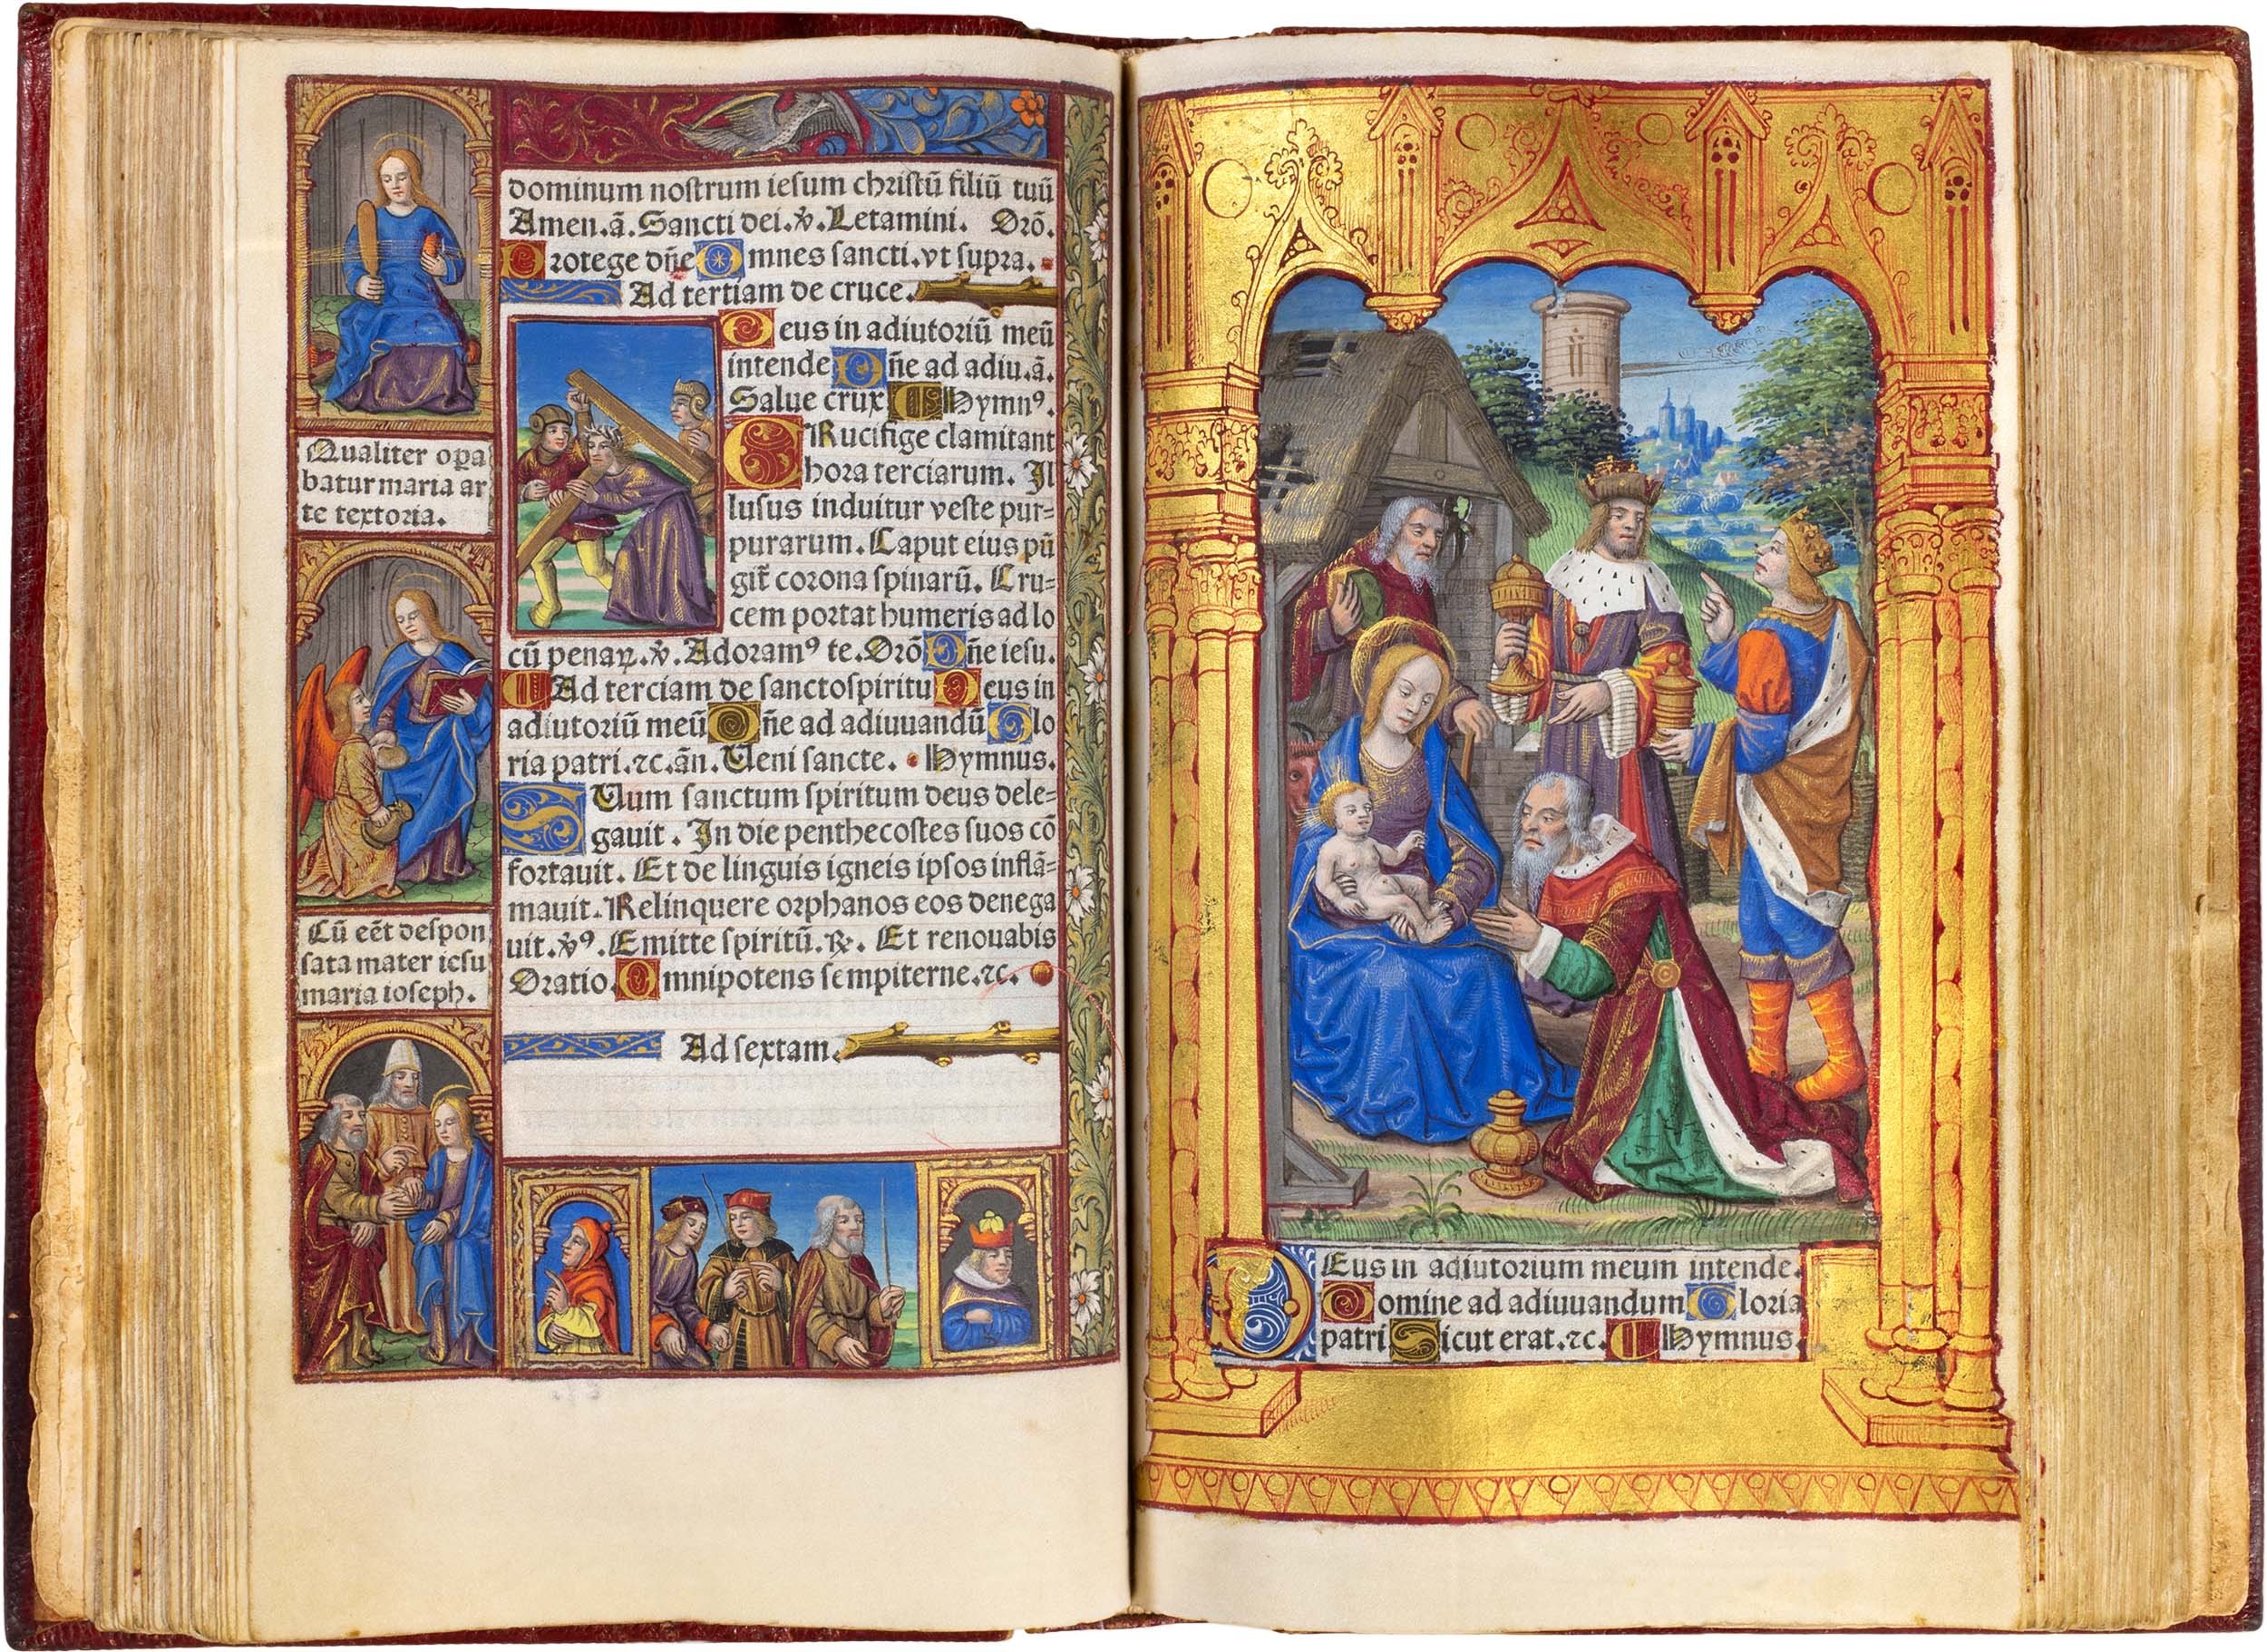 Horae-bmv-book-of-hours-Louis-XII-martainville-master-philippa-guelders-paris-pigouchet-vostre-15.10.1499-38.jpg